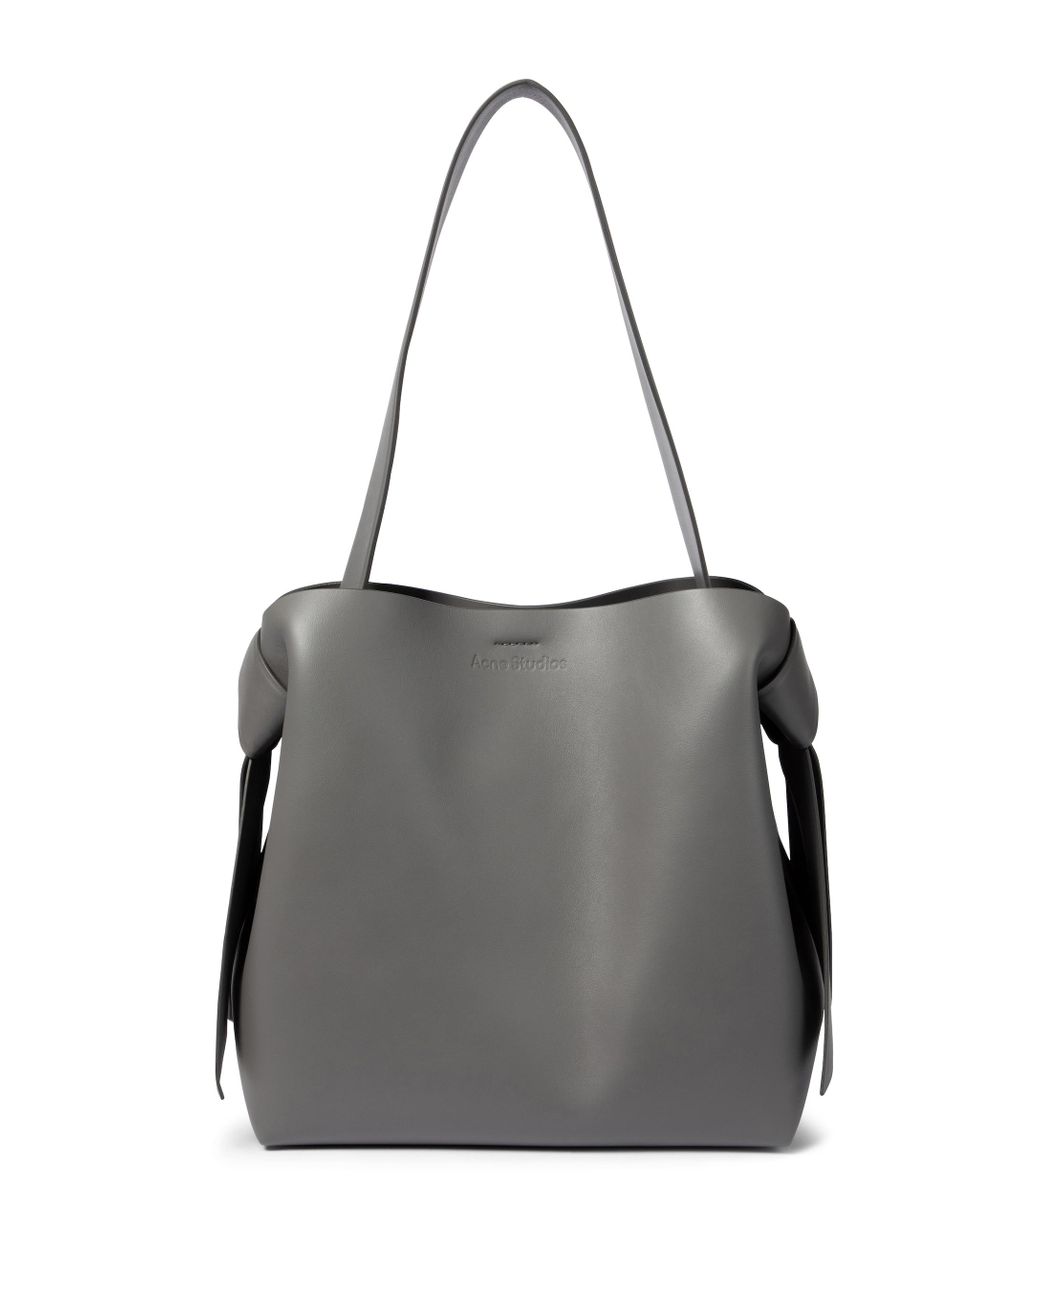 Acne Studios Musubi Medium Leather Shoulder Bag in Grey (Gray) - Lyst